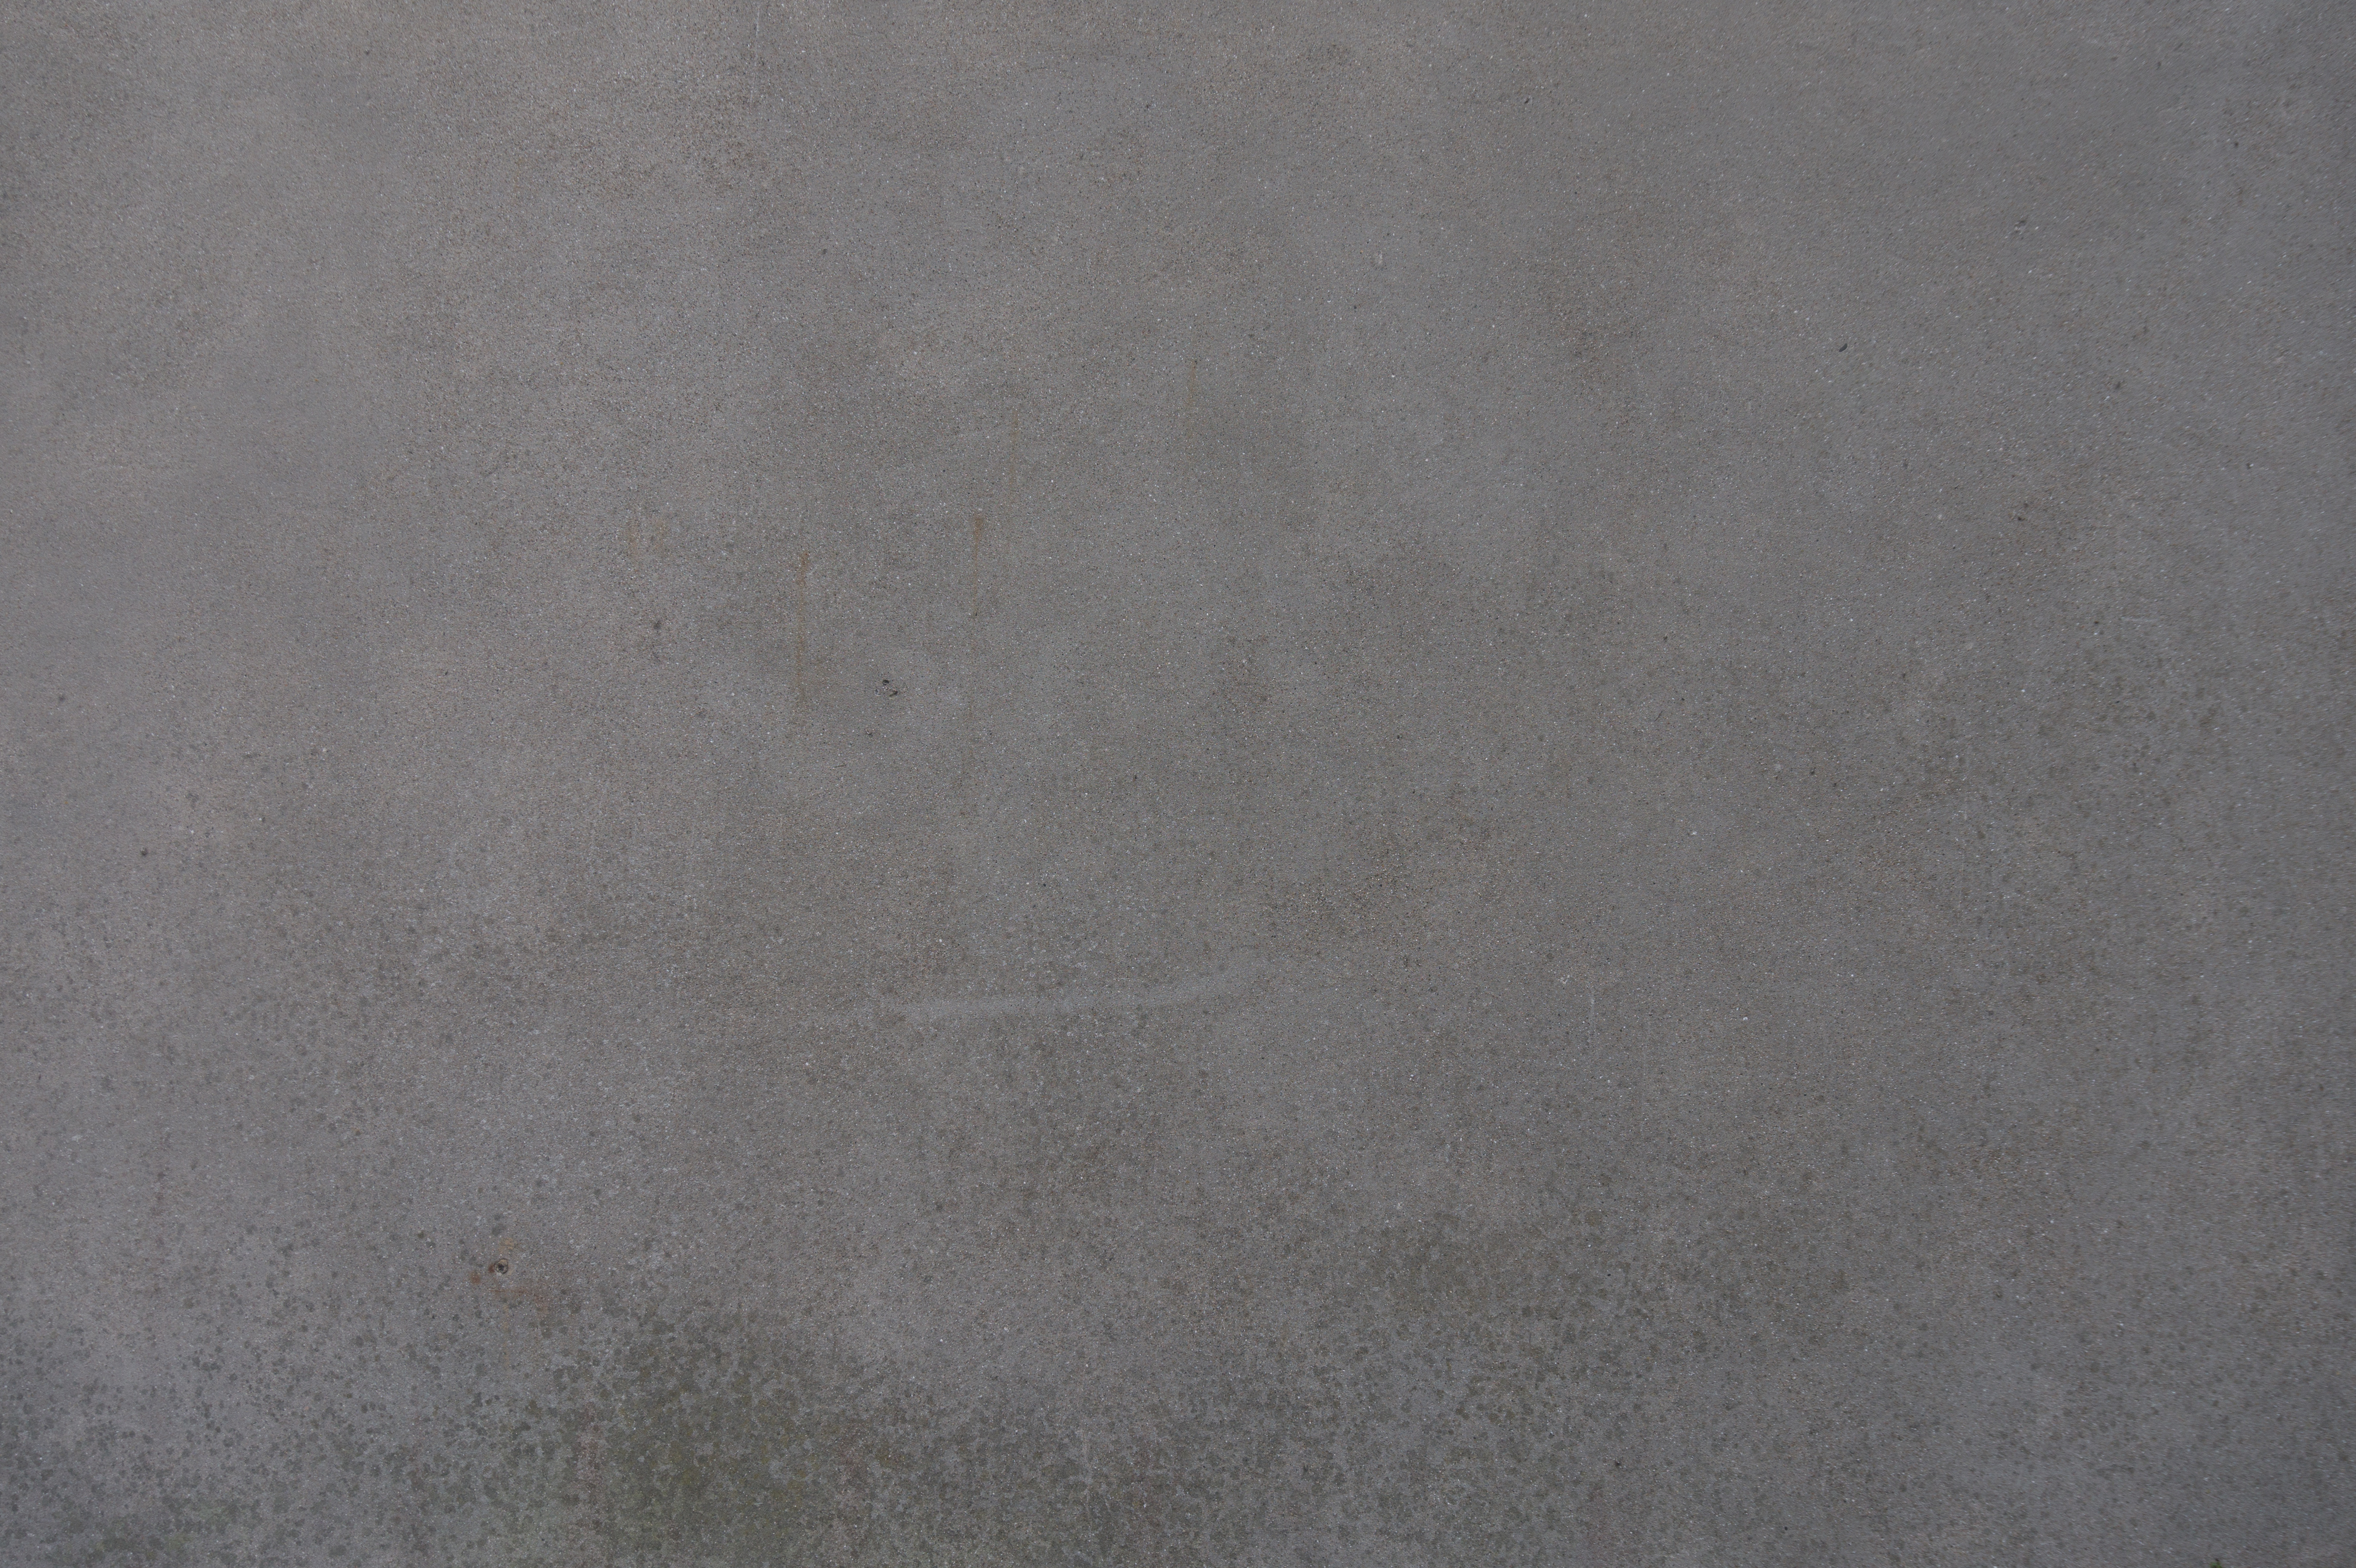 Dark grey plain concrete - Concrete - Texturify - Free textures